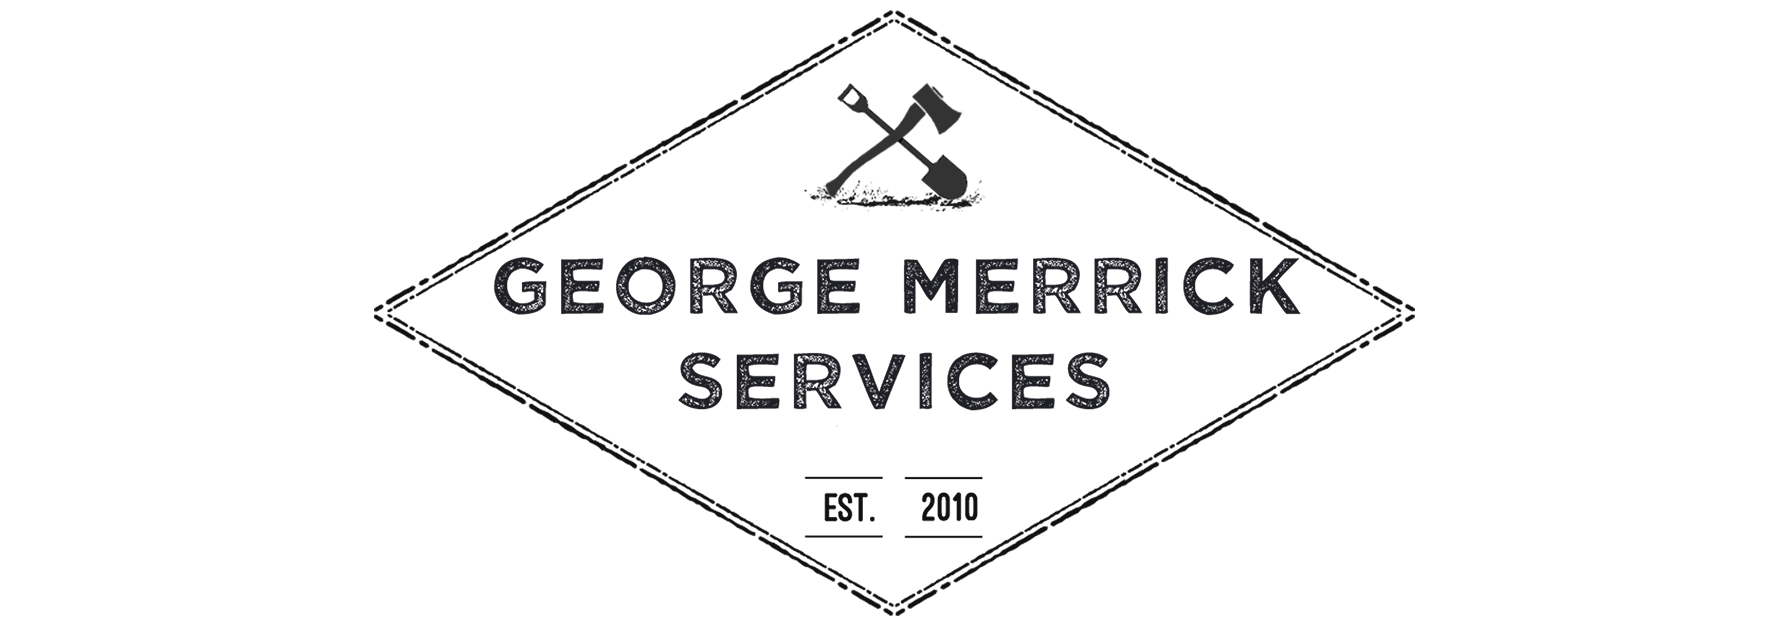 George Merrick Services